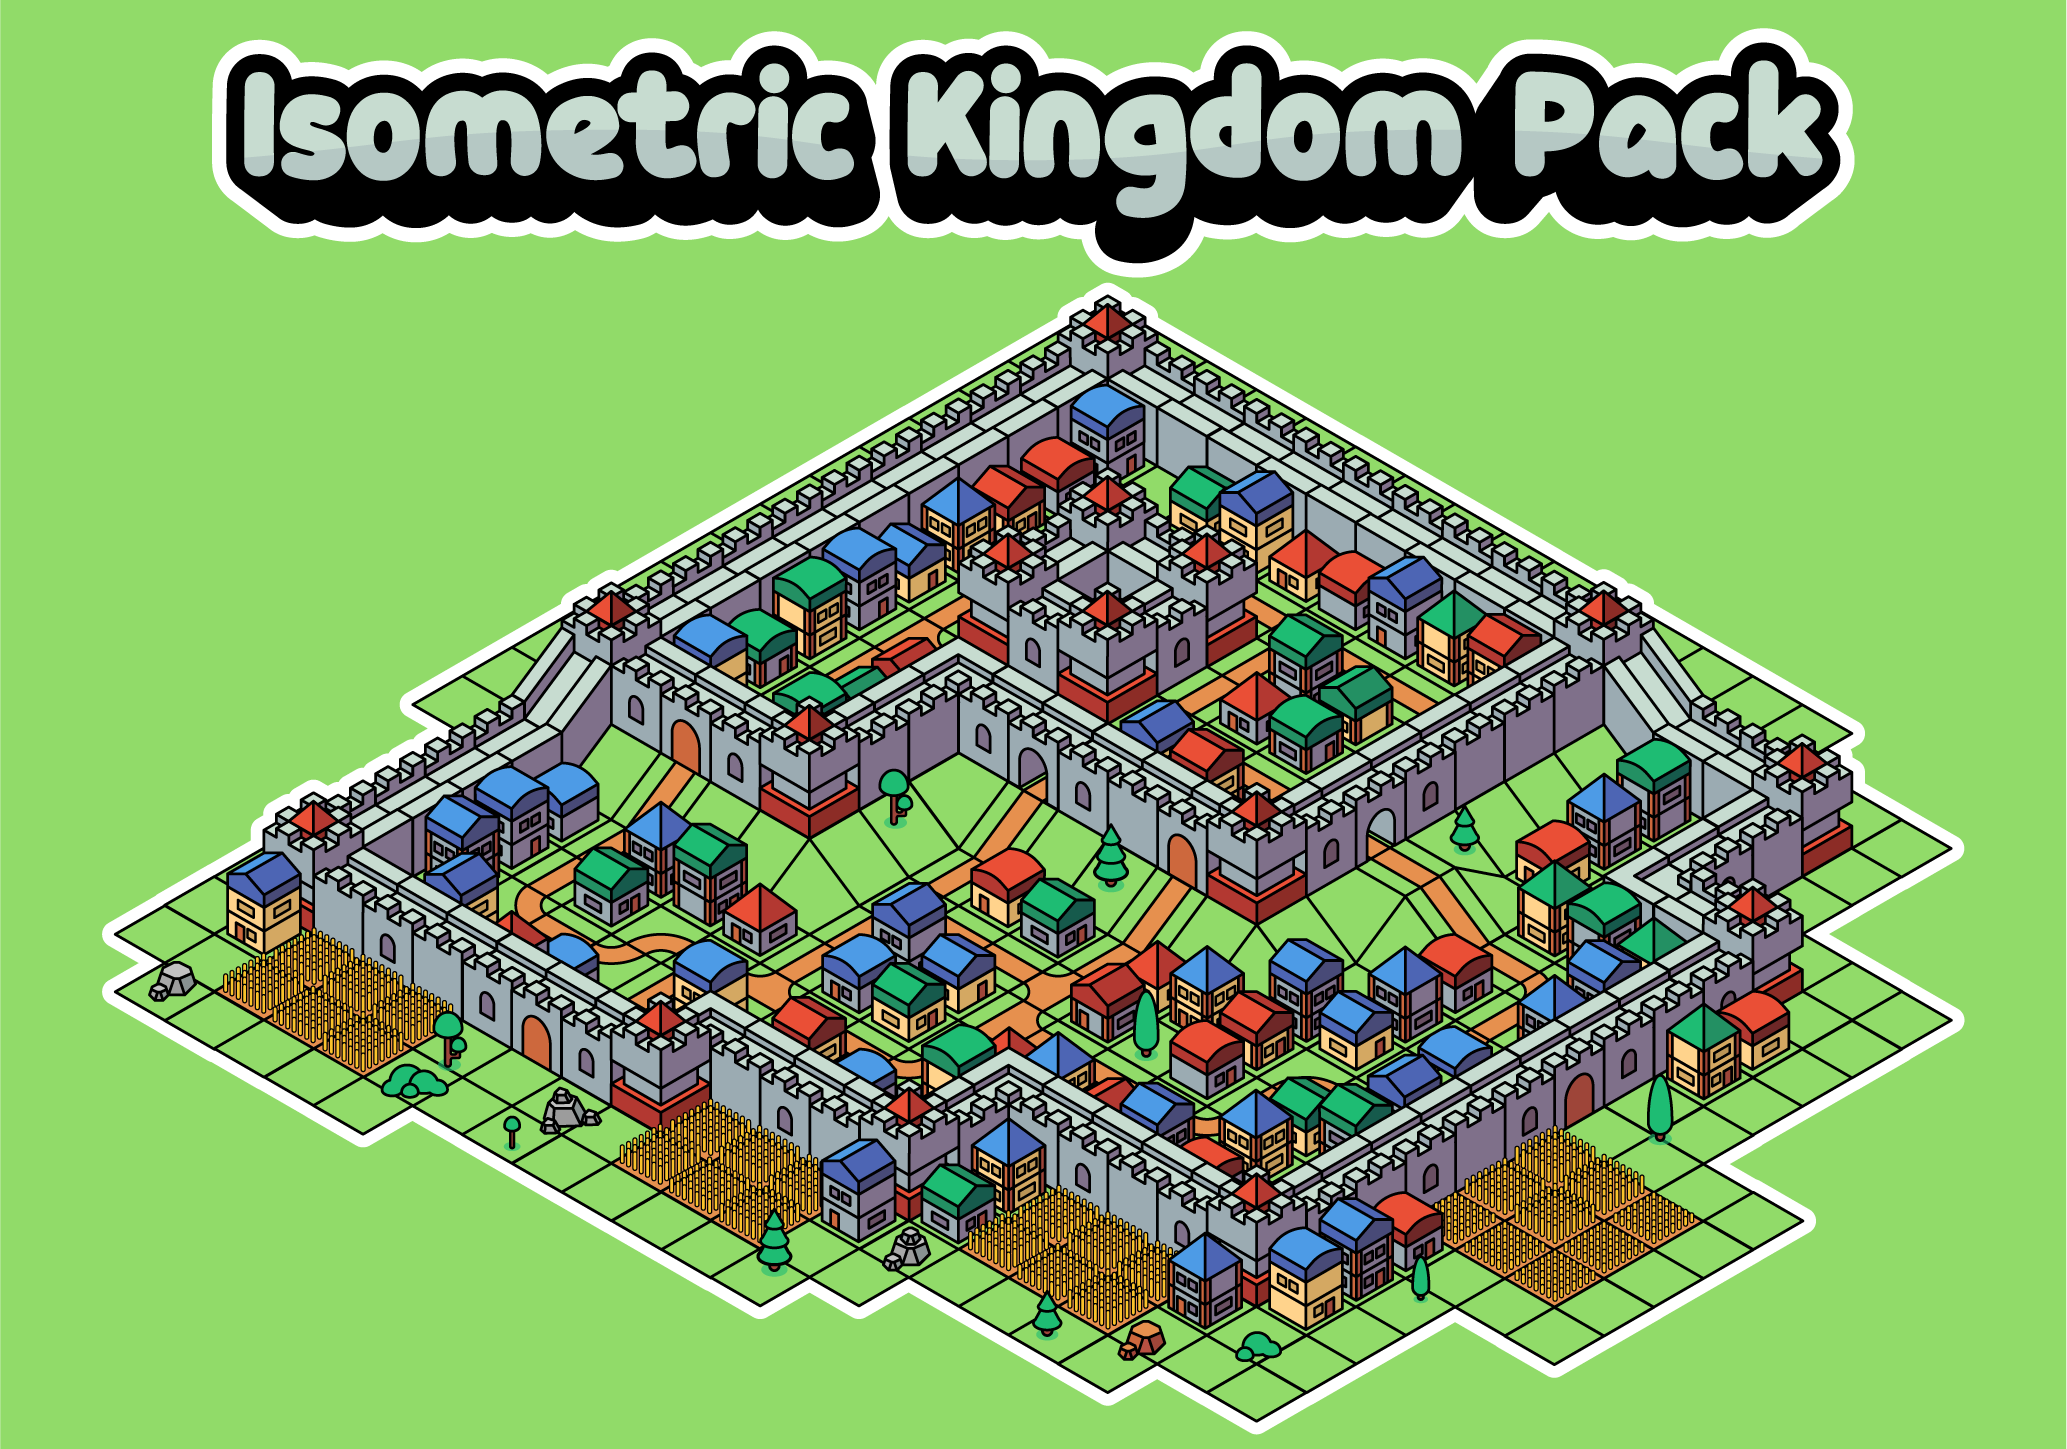 Isometric Kingdom Pack